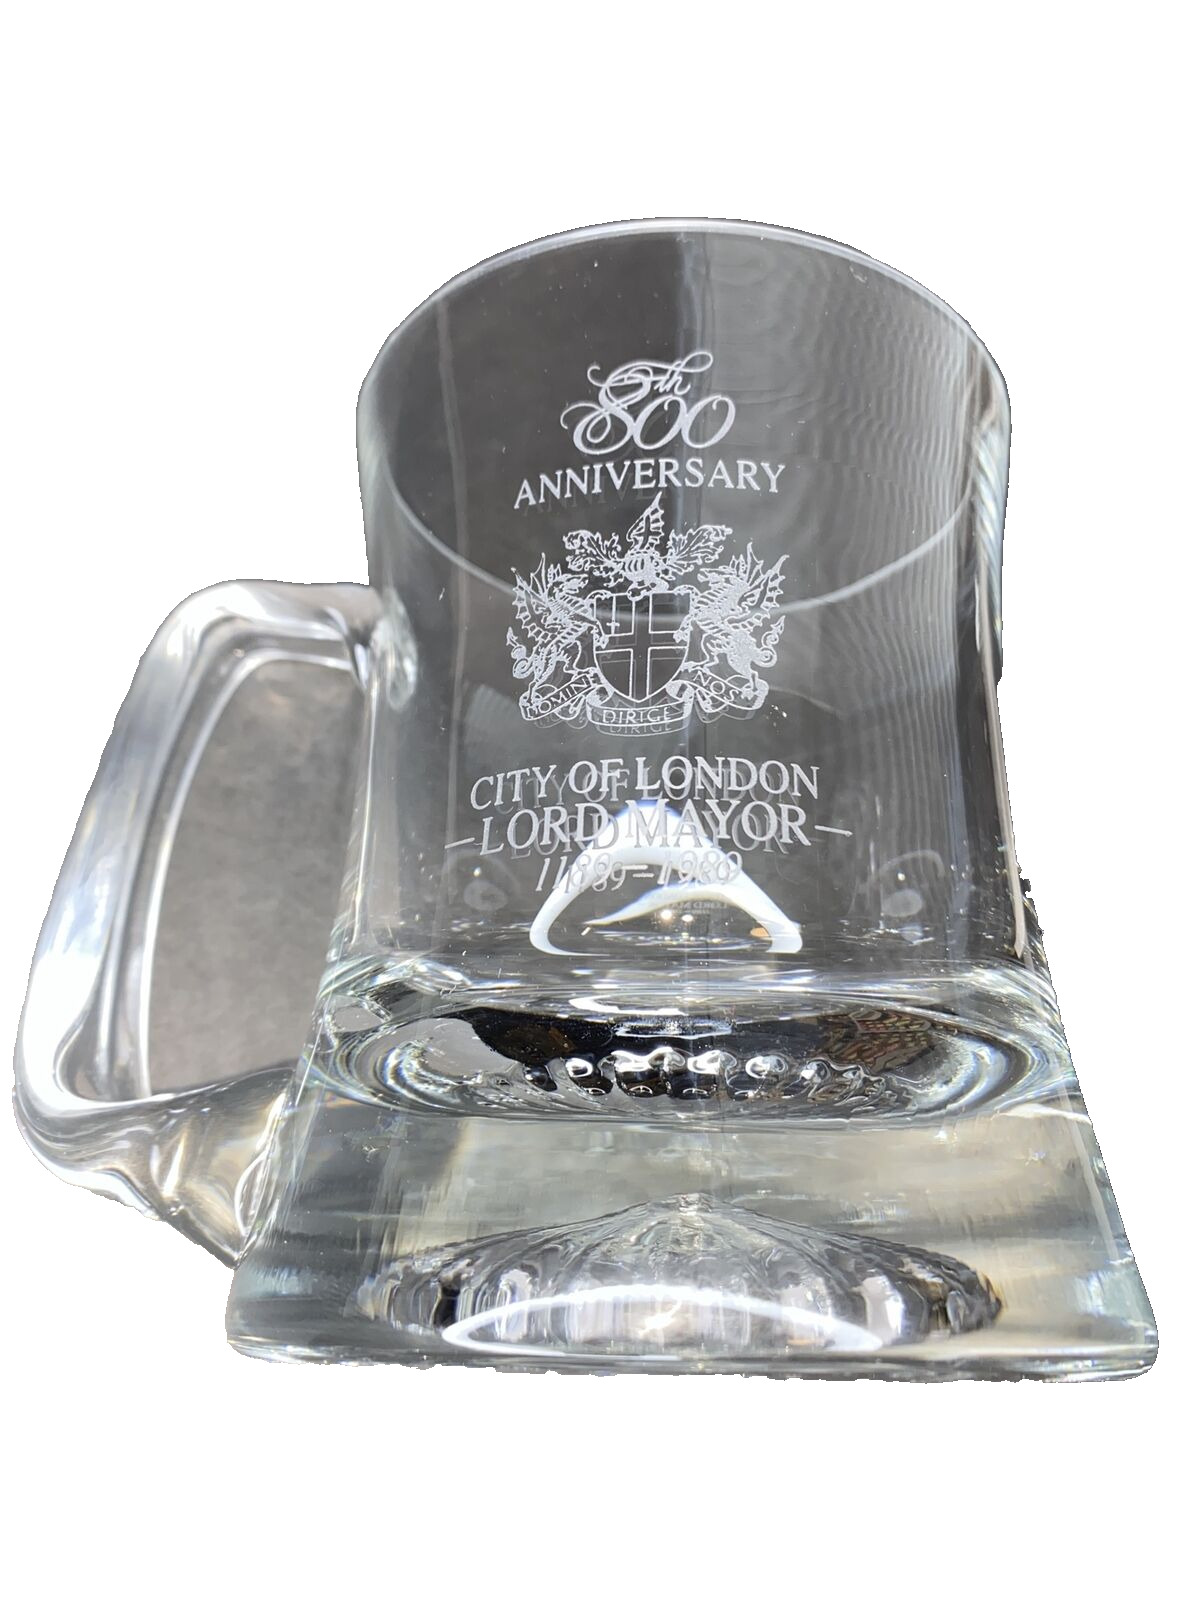 London England 800th Anniversary Lord Mayor Crystal Glass Stein Mug Cup Vintage